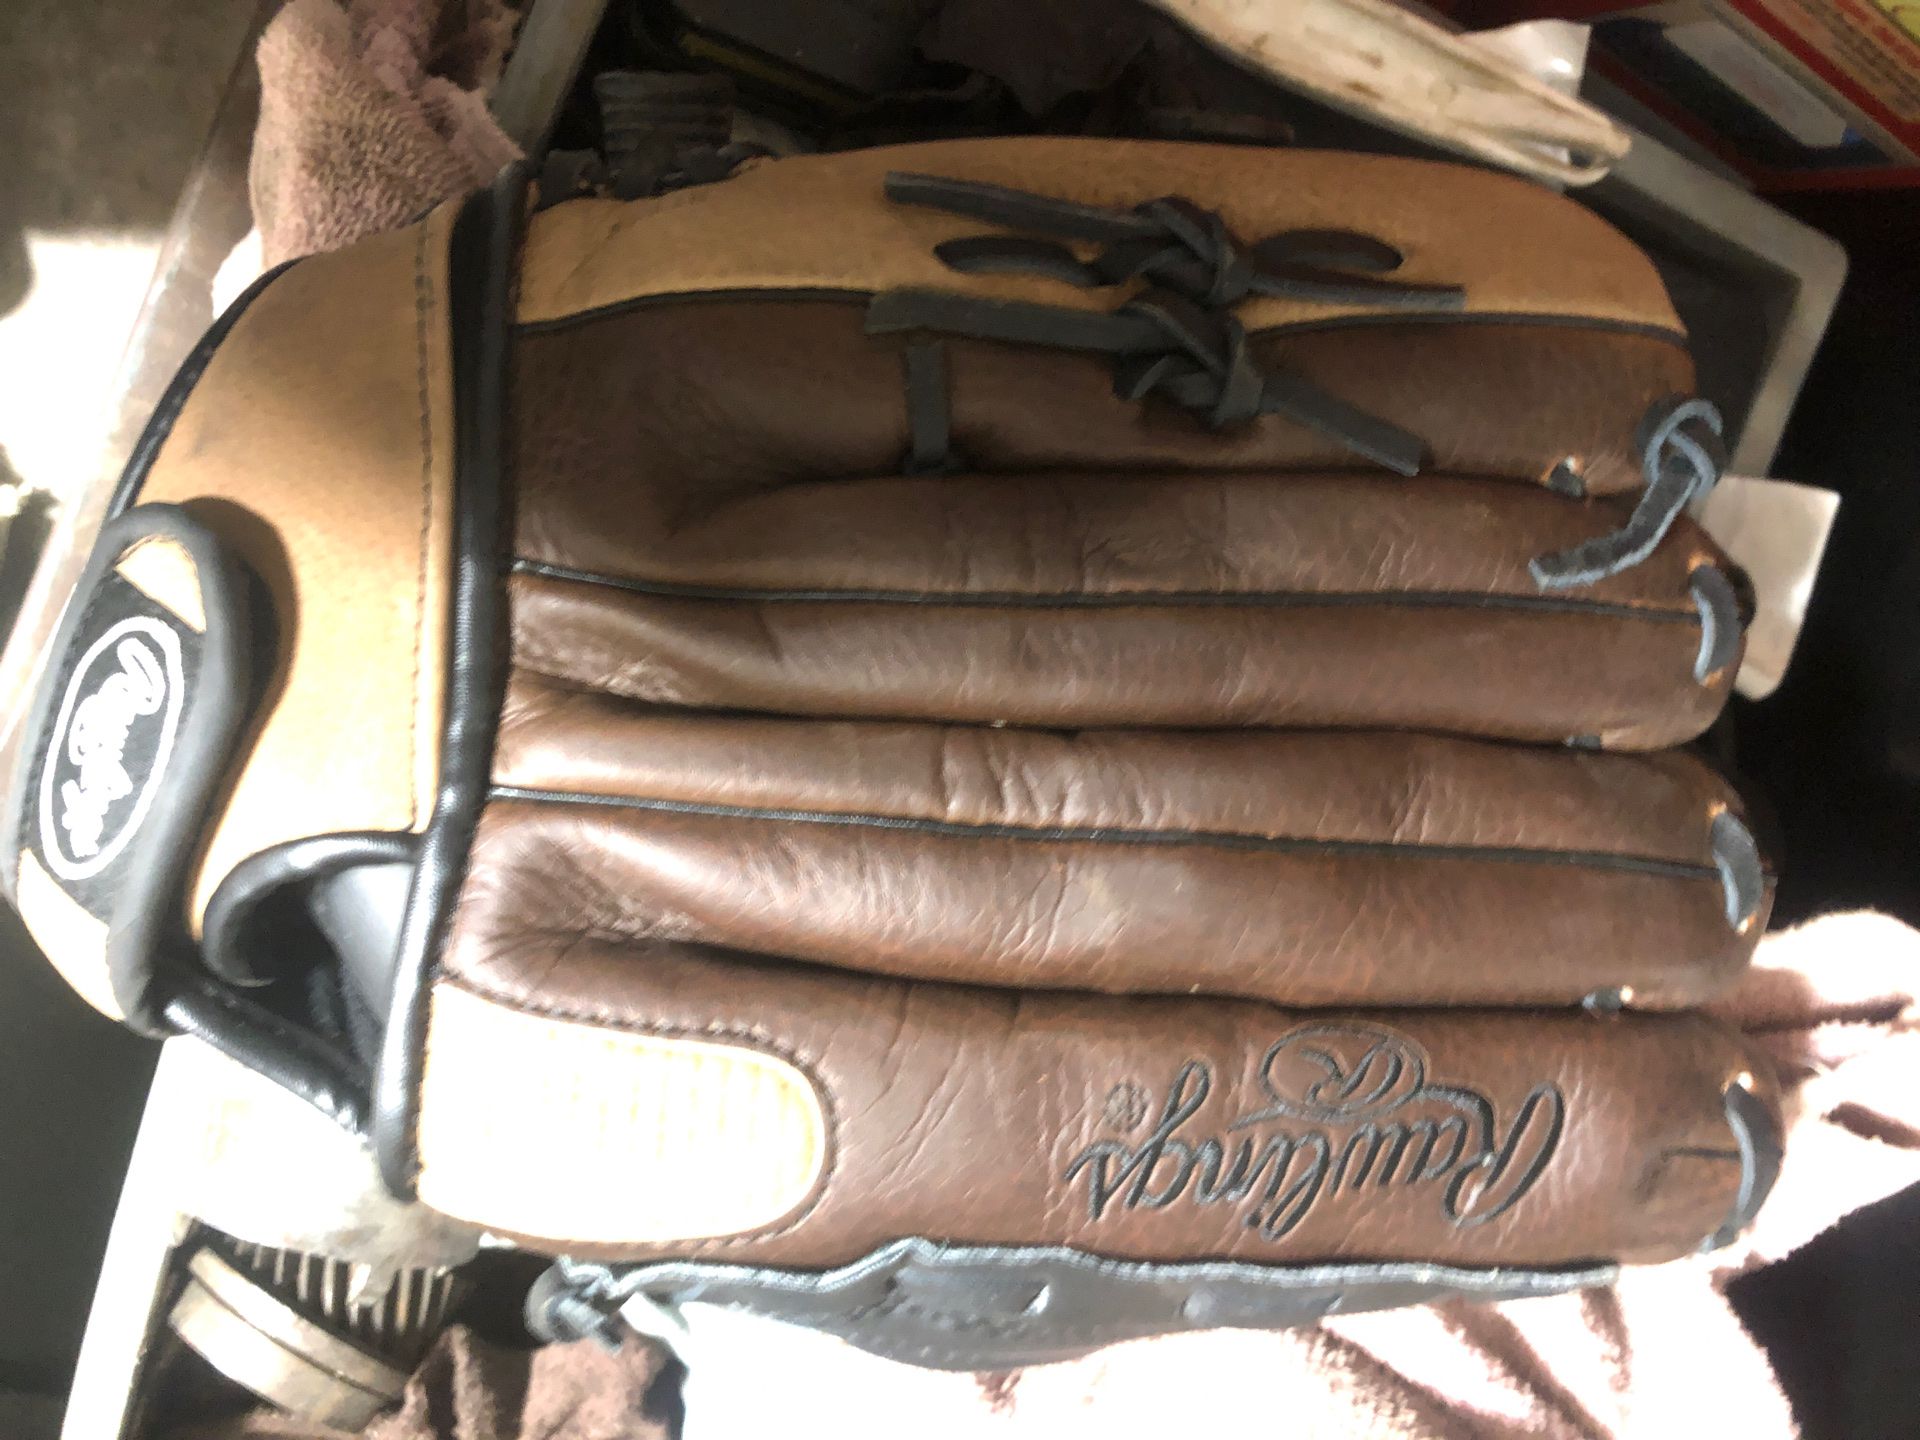 Rawlings leather softball glove